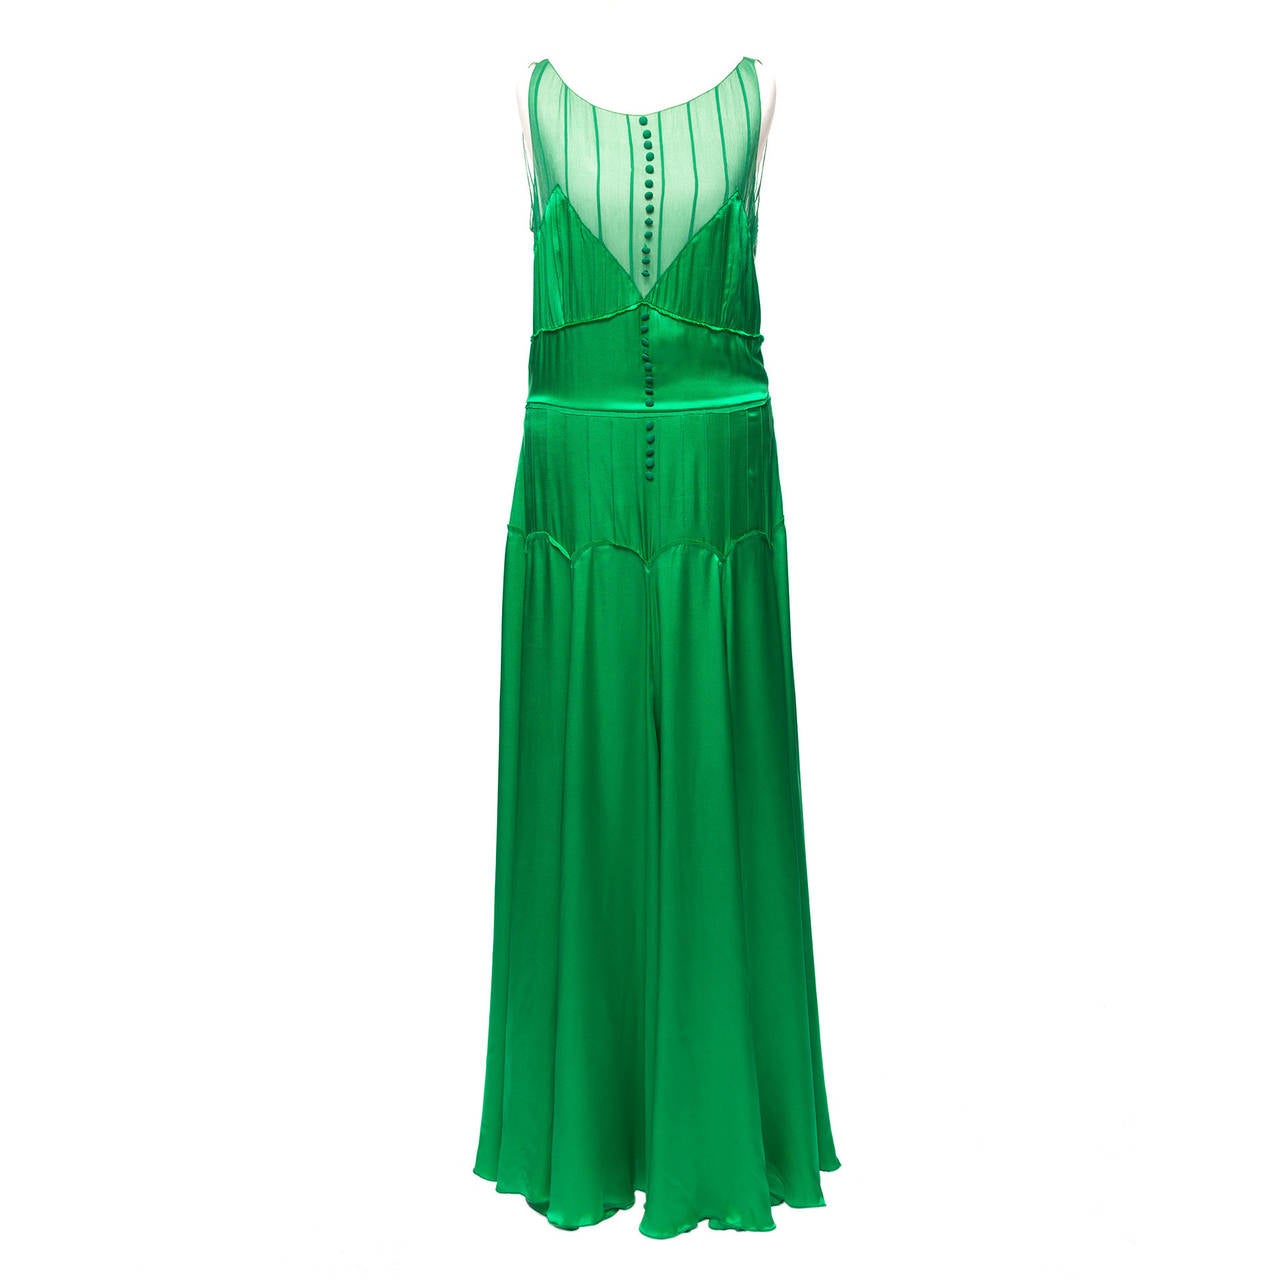 Chloe By Phoebe Philo green silk 1920's style evening dress, Sz. S